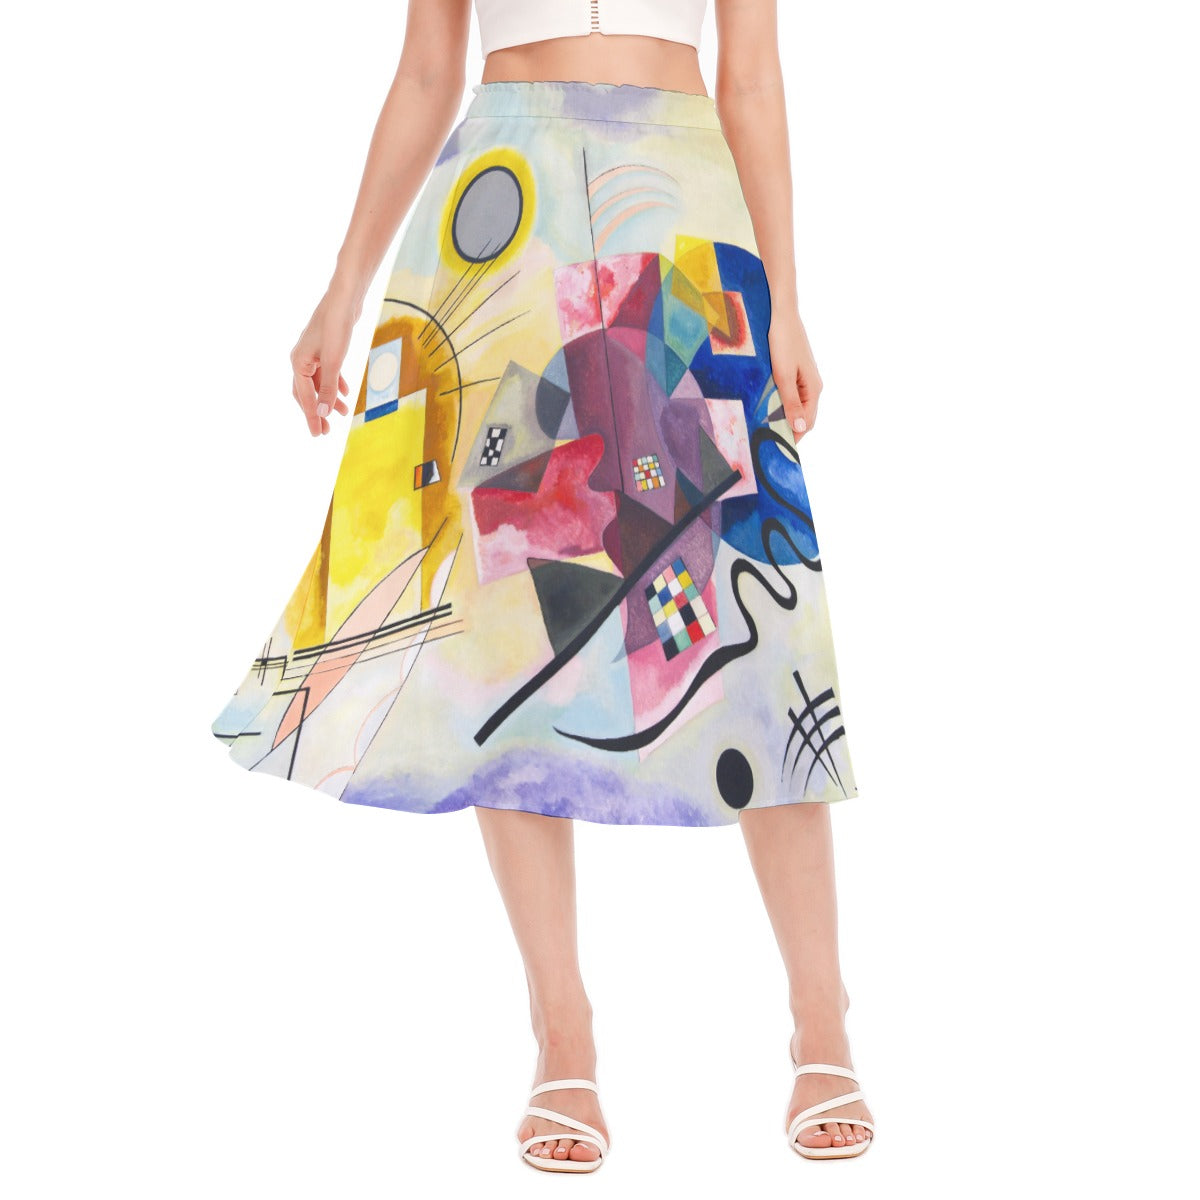 Vibrant abstract chiffon skirt